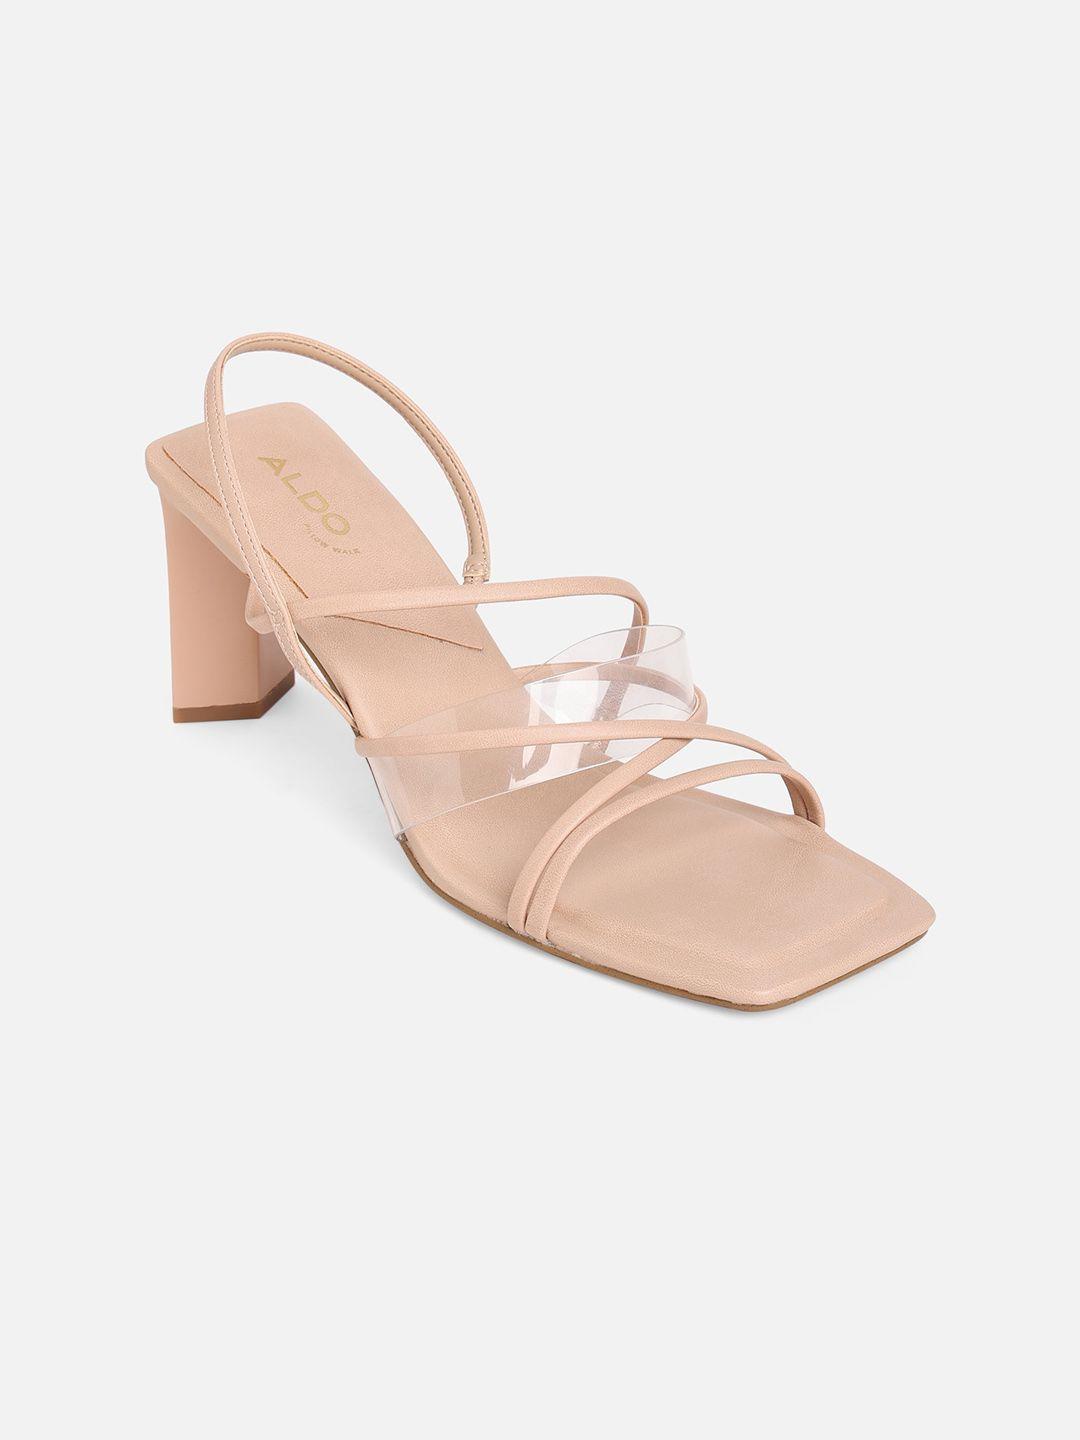 aldo-women-peach-coloured-block-sandals